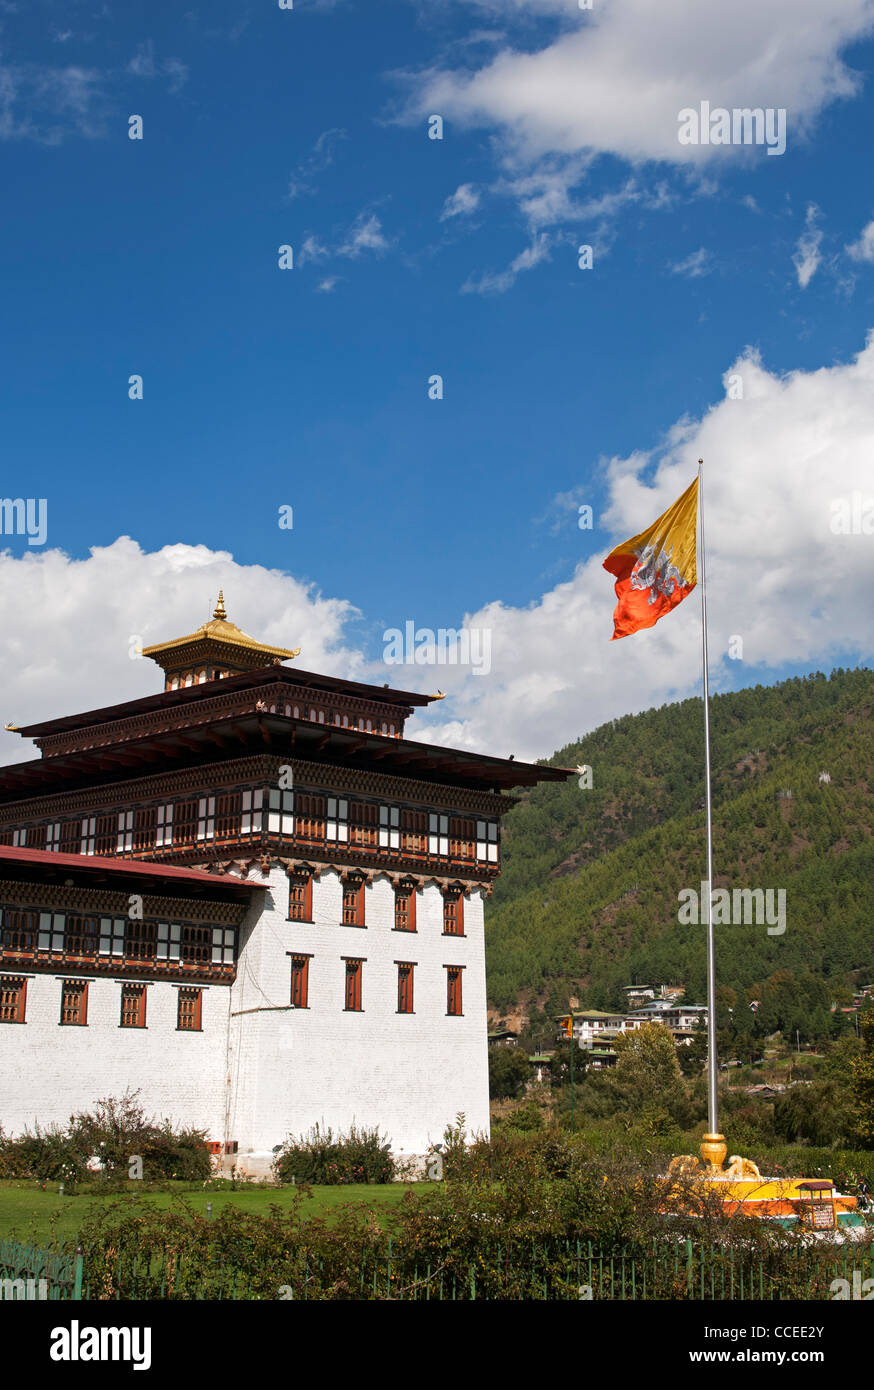 Die bhutanischen Nationalflagge flattert am Regierungssitz Thimphu Dzong oder Trashichhoe Dzong, Thimphu, Bhutan Stockfoto